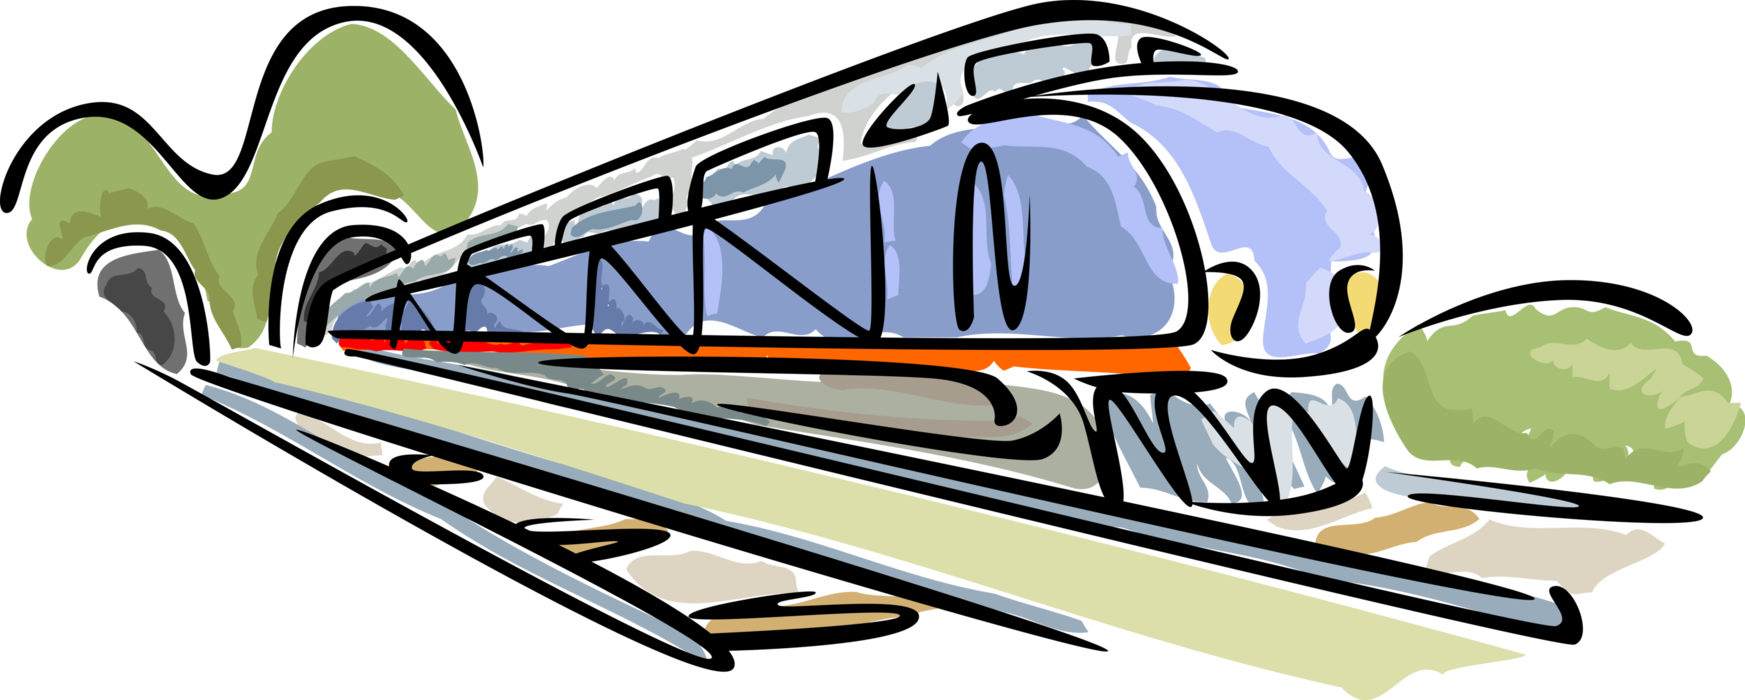 Vector Illustration of Railroad Rail Transport Speeding Locomotive Railway Train Engine